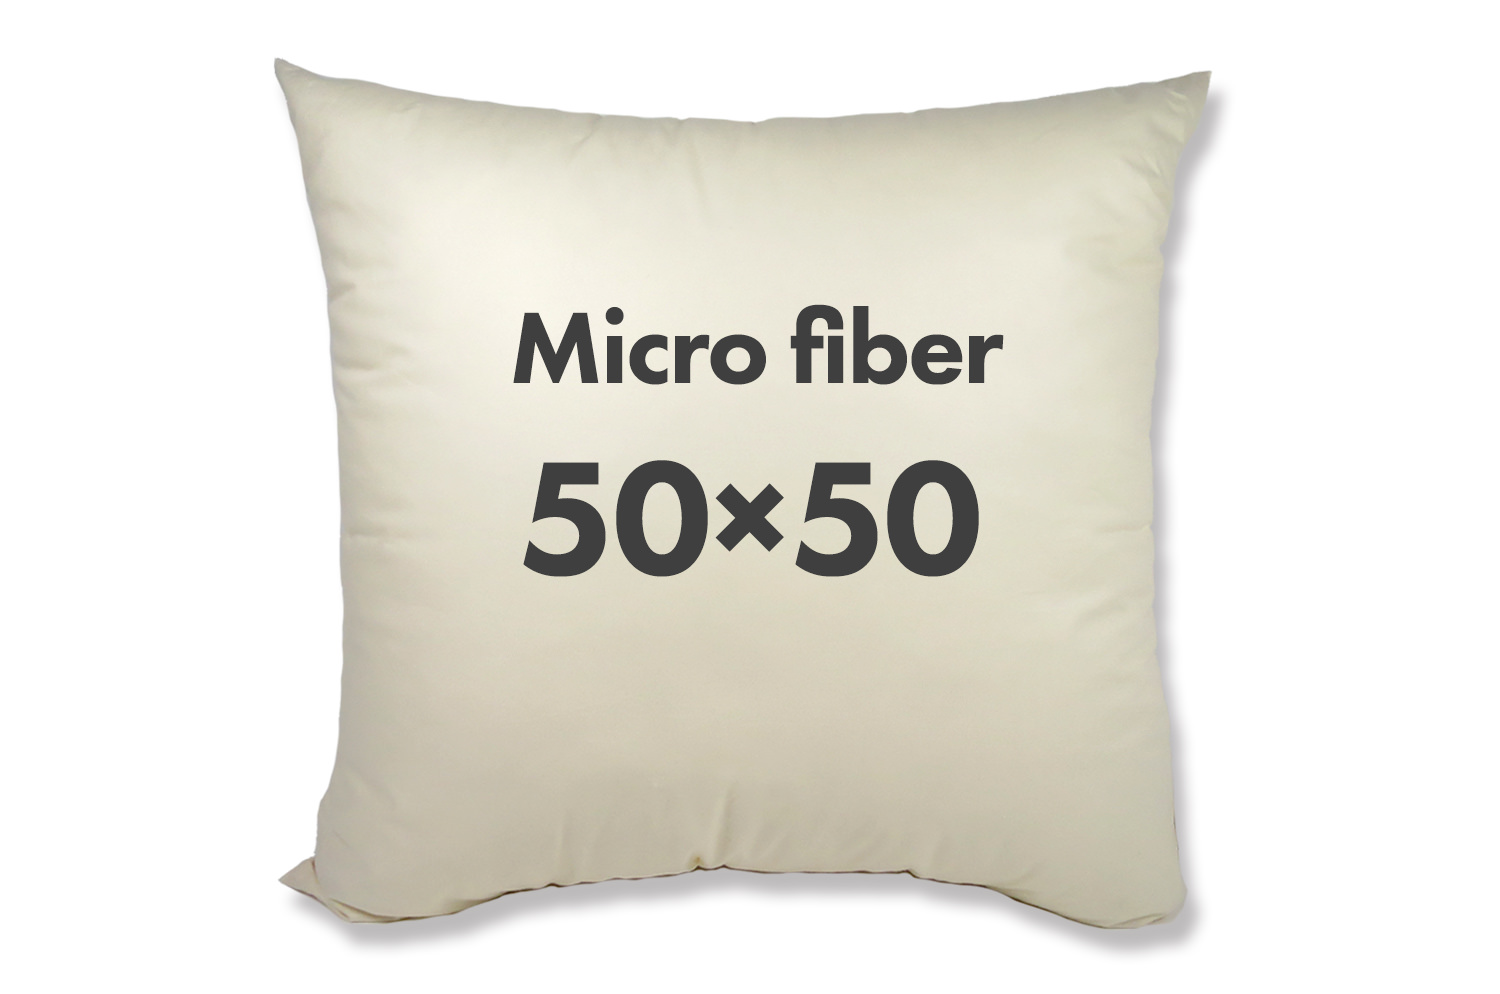 The Microfiber もちもち羽毛タッチ 日本製マイクロファイバーヌードクッション（クッション中身） 50×50cm用